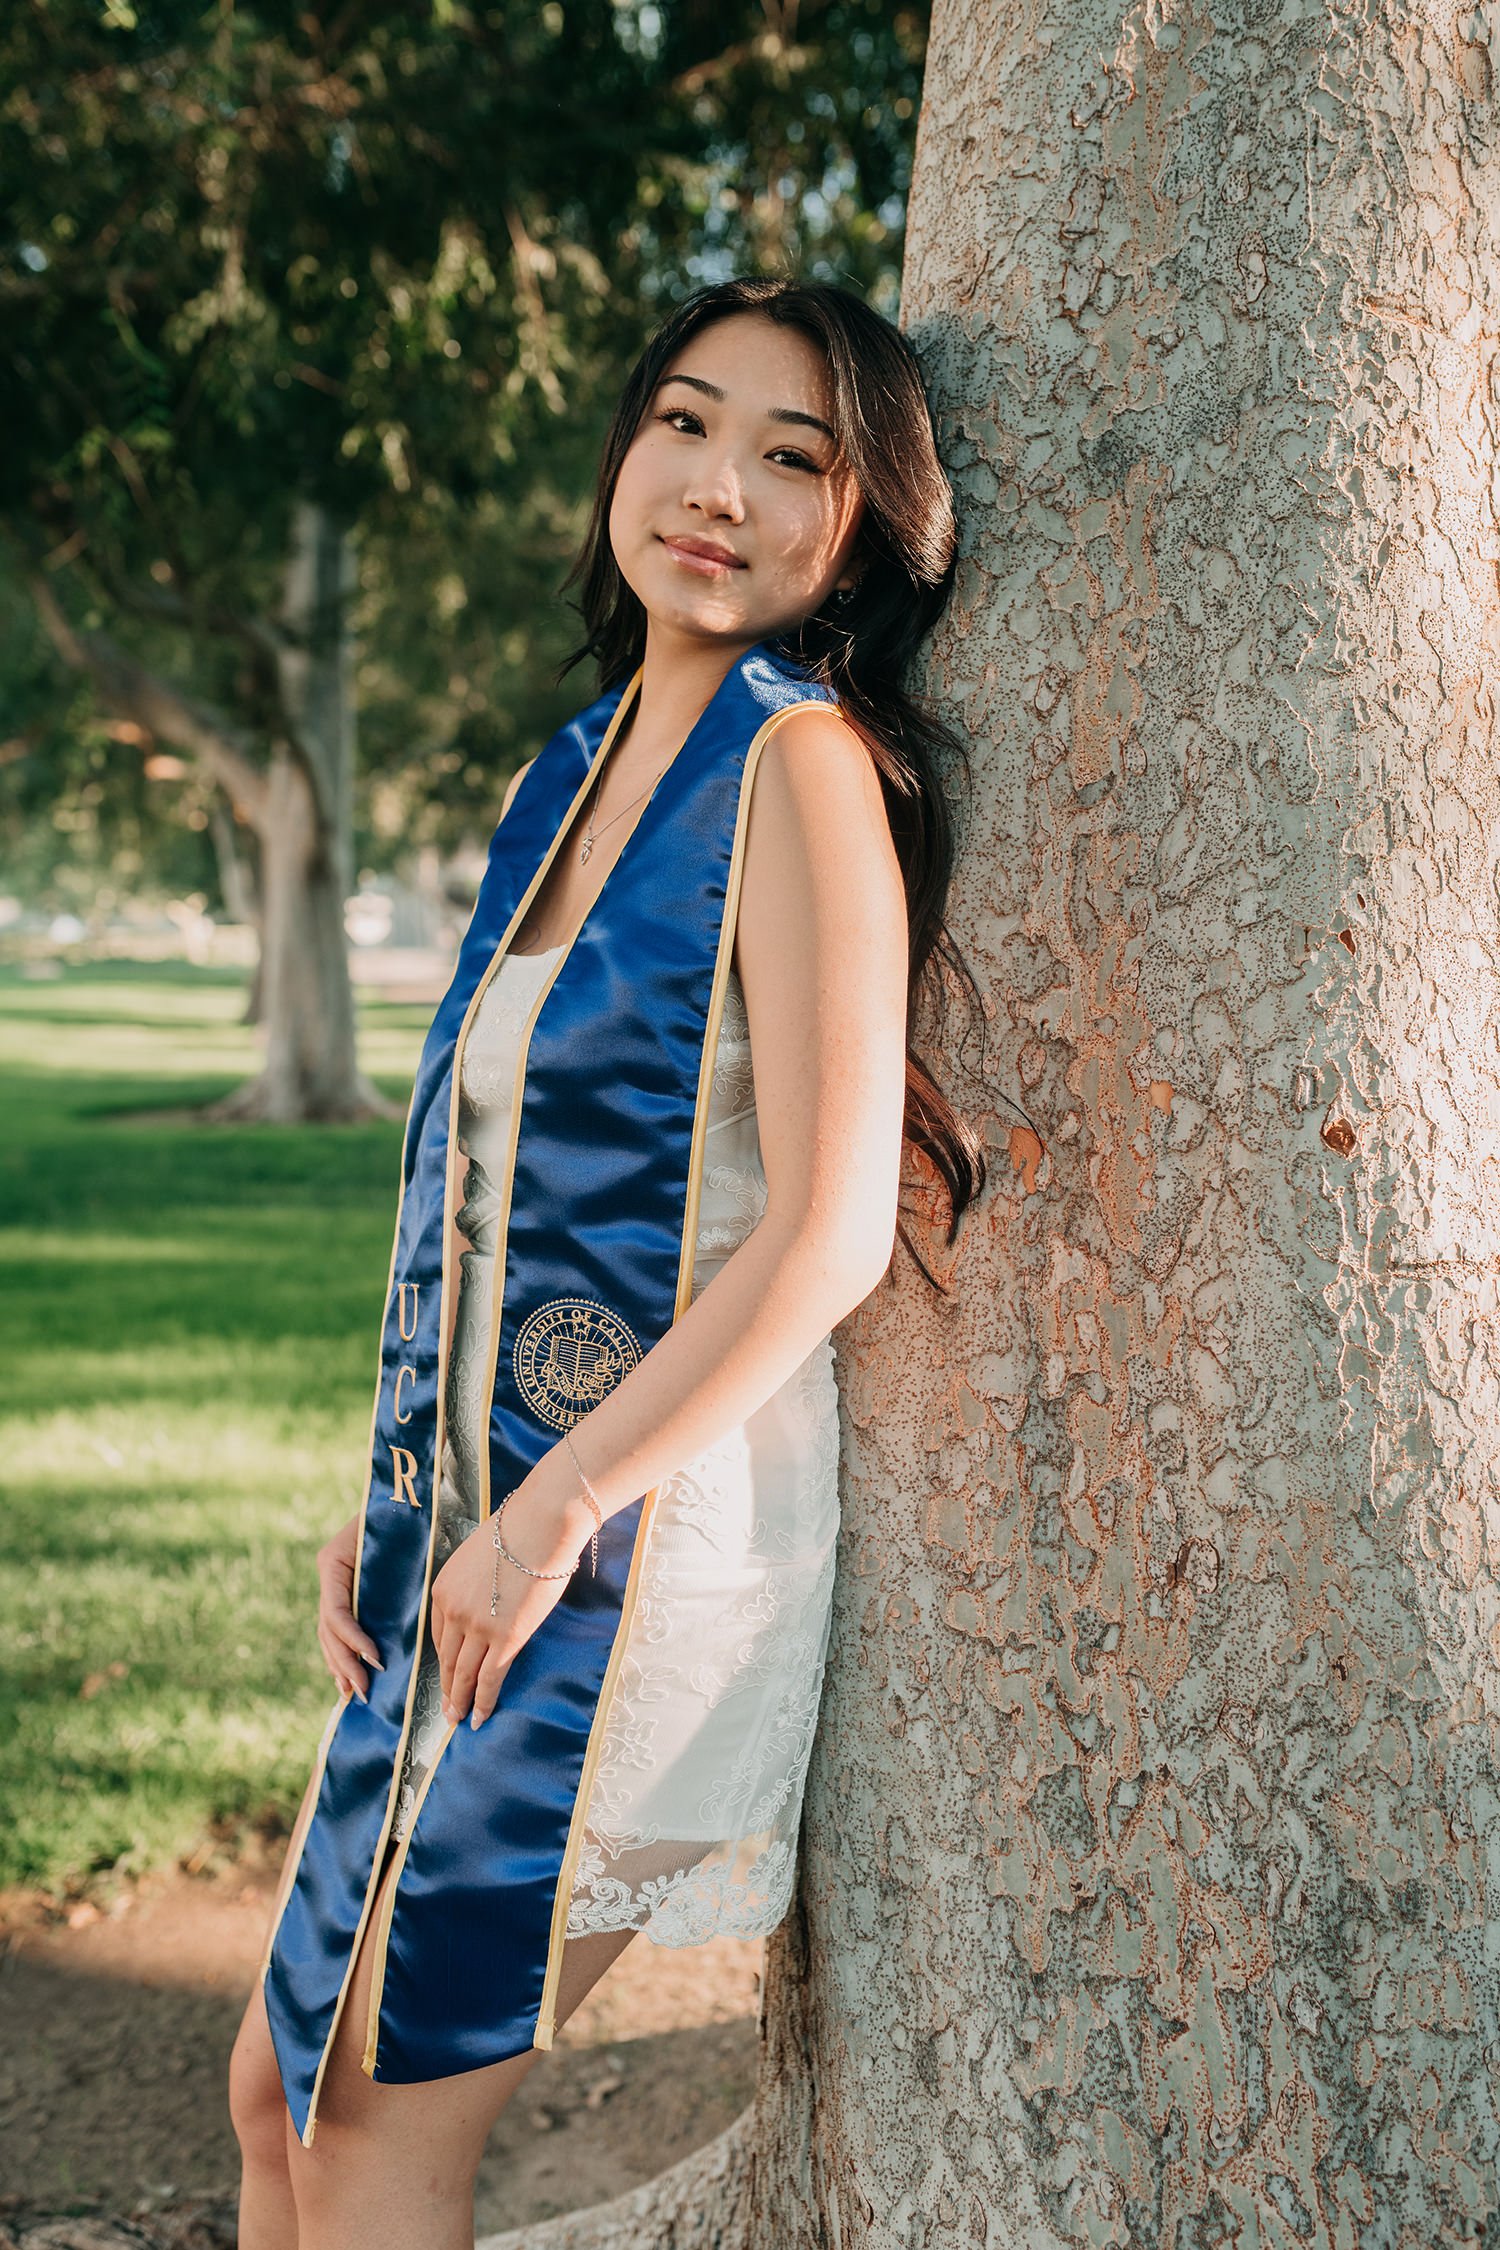 ucr-graduation-portrait-riverside-california-photographer-5.jpg